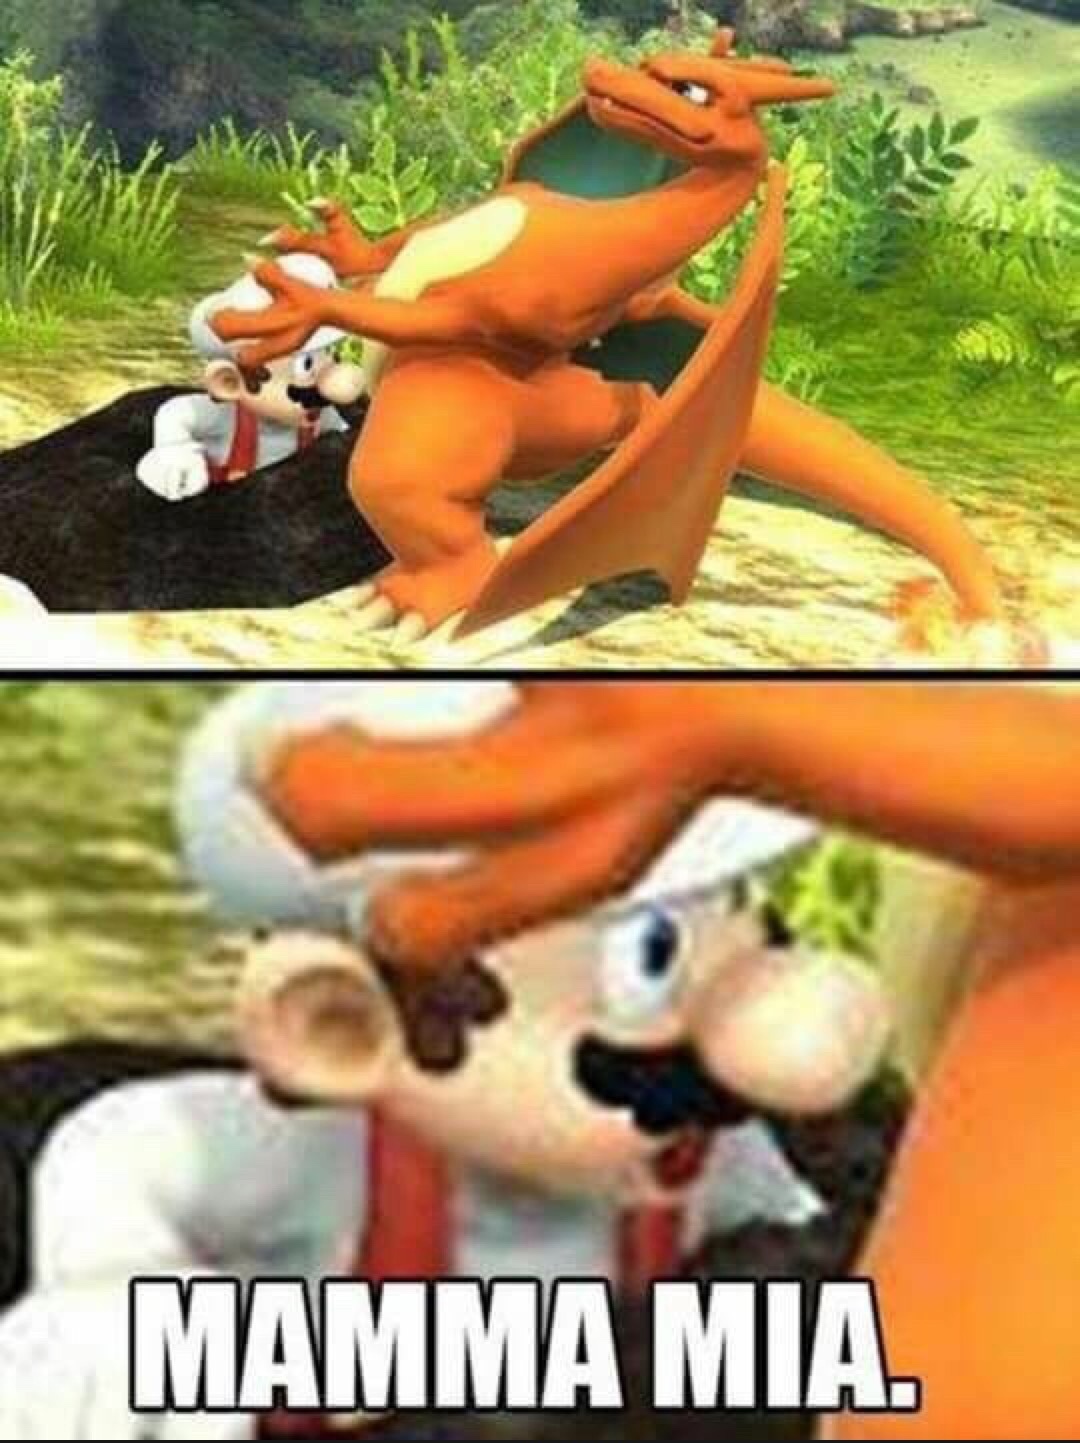 I’m in a trouble Luigi - meme